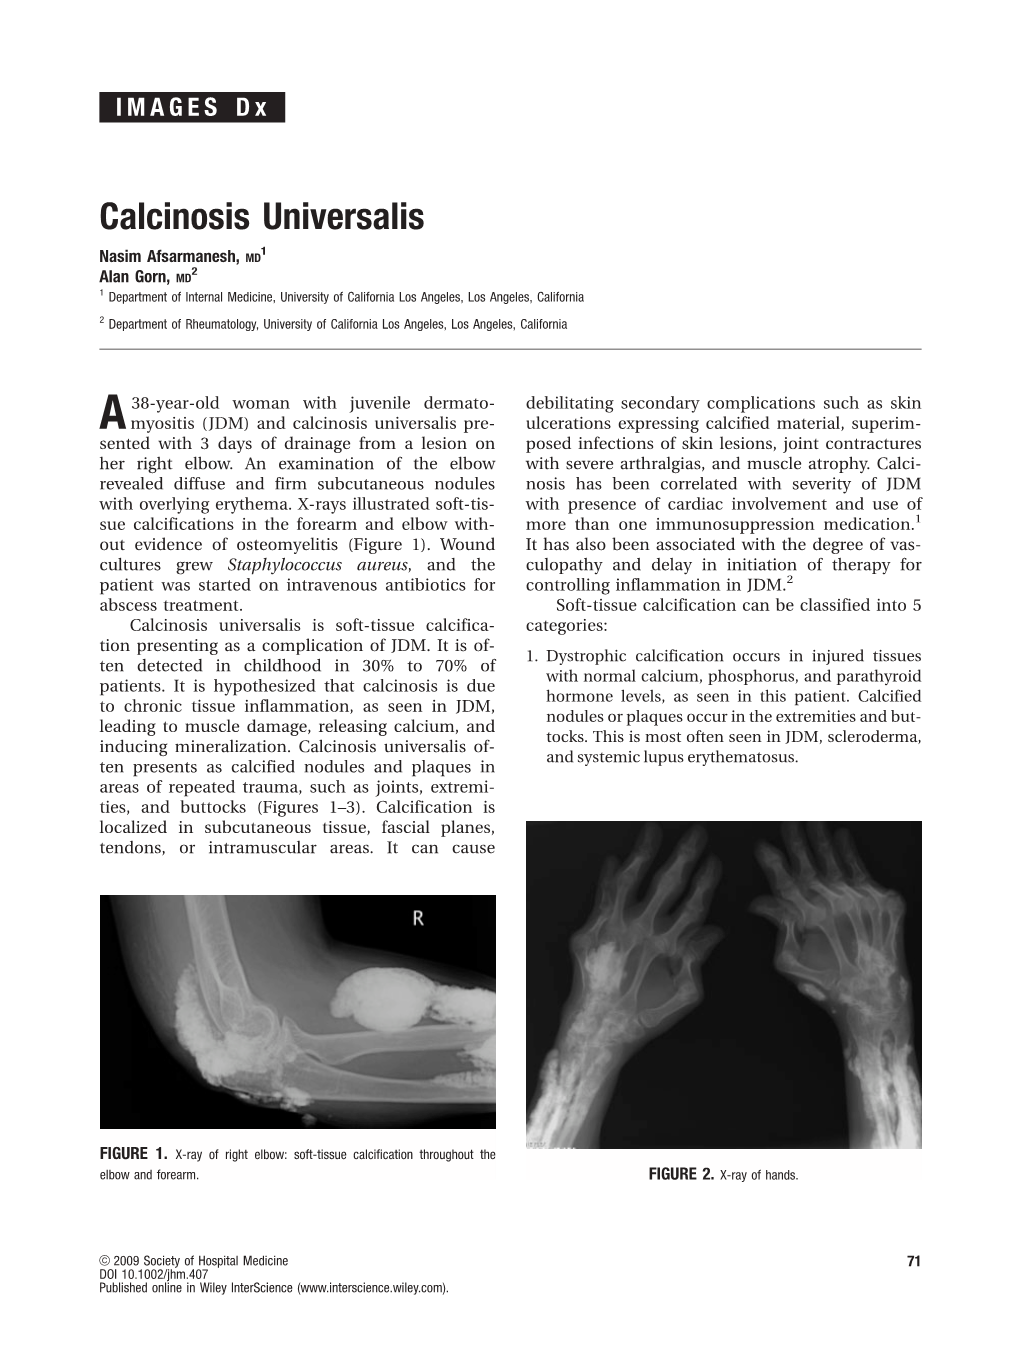 Calcinosis Universalis